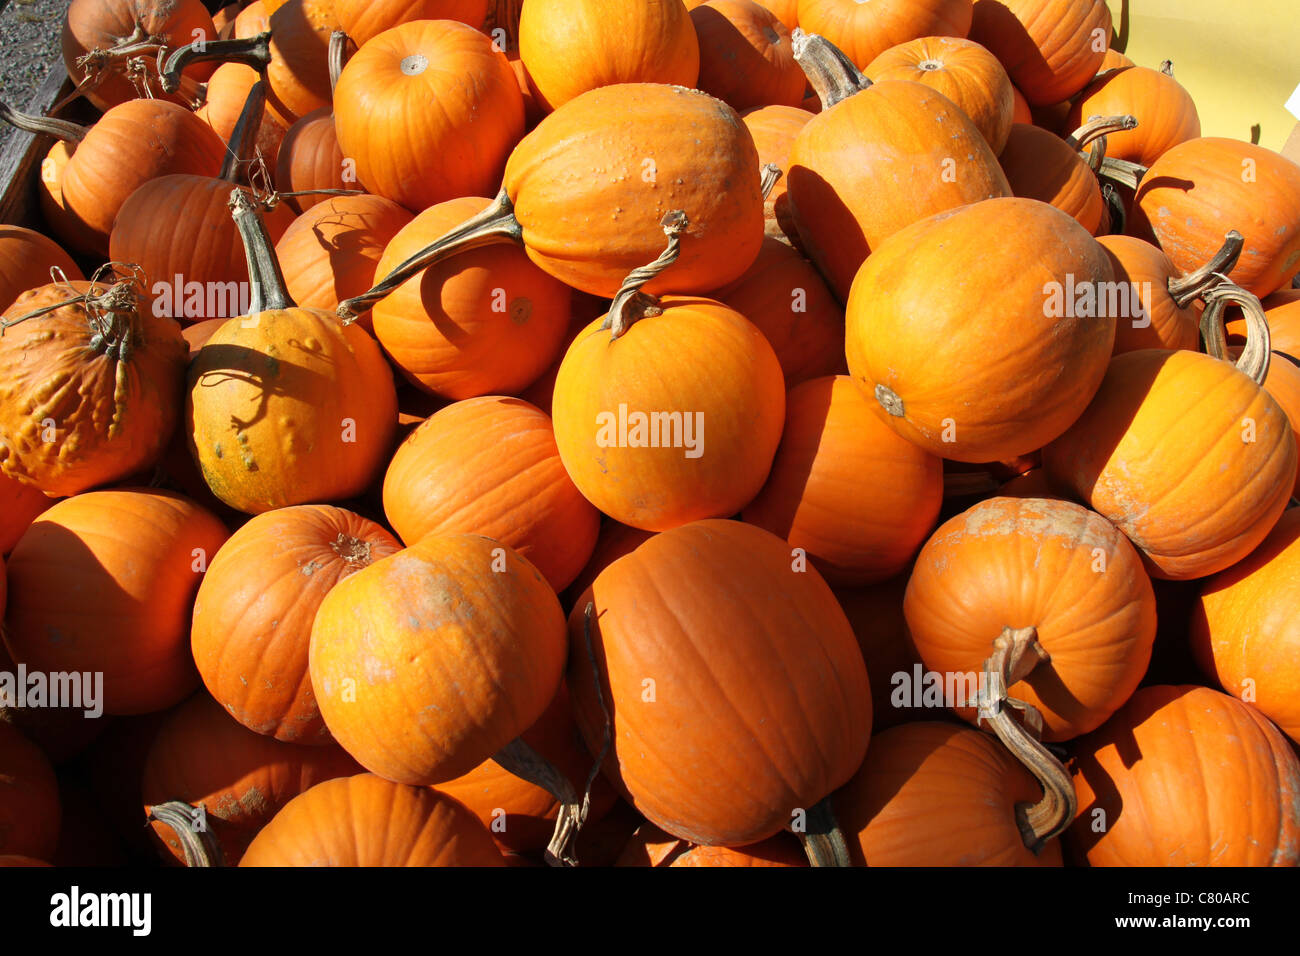 Pile of orange pumpkins at a farmers market Stock Photo